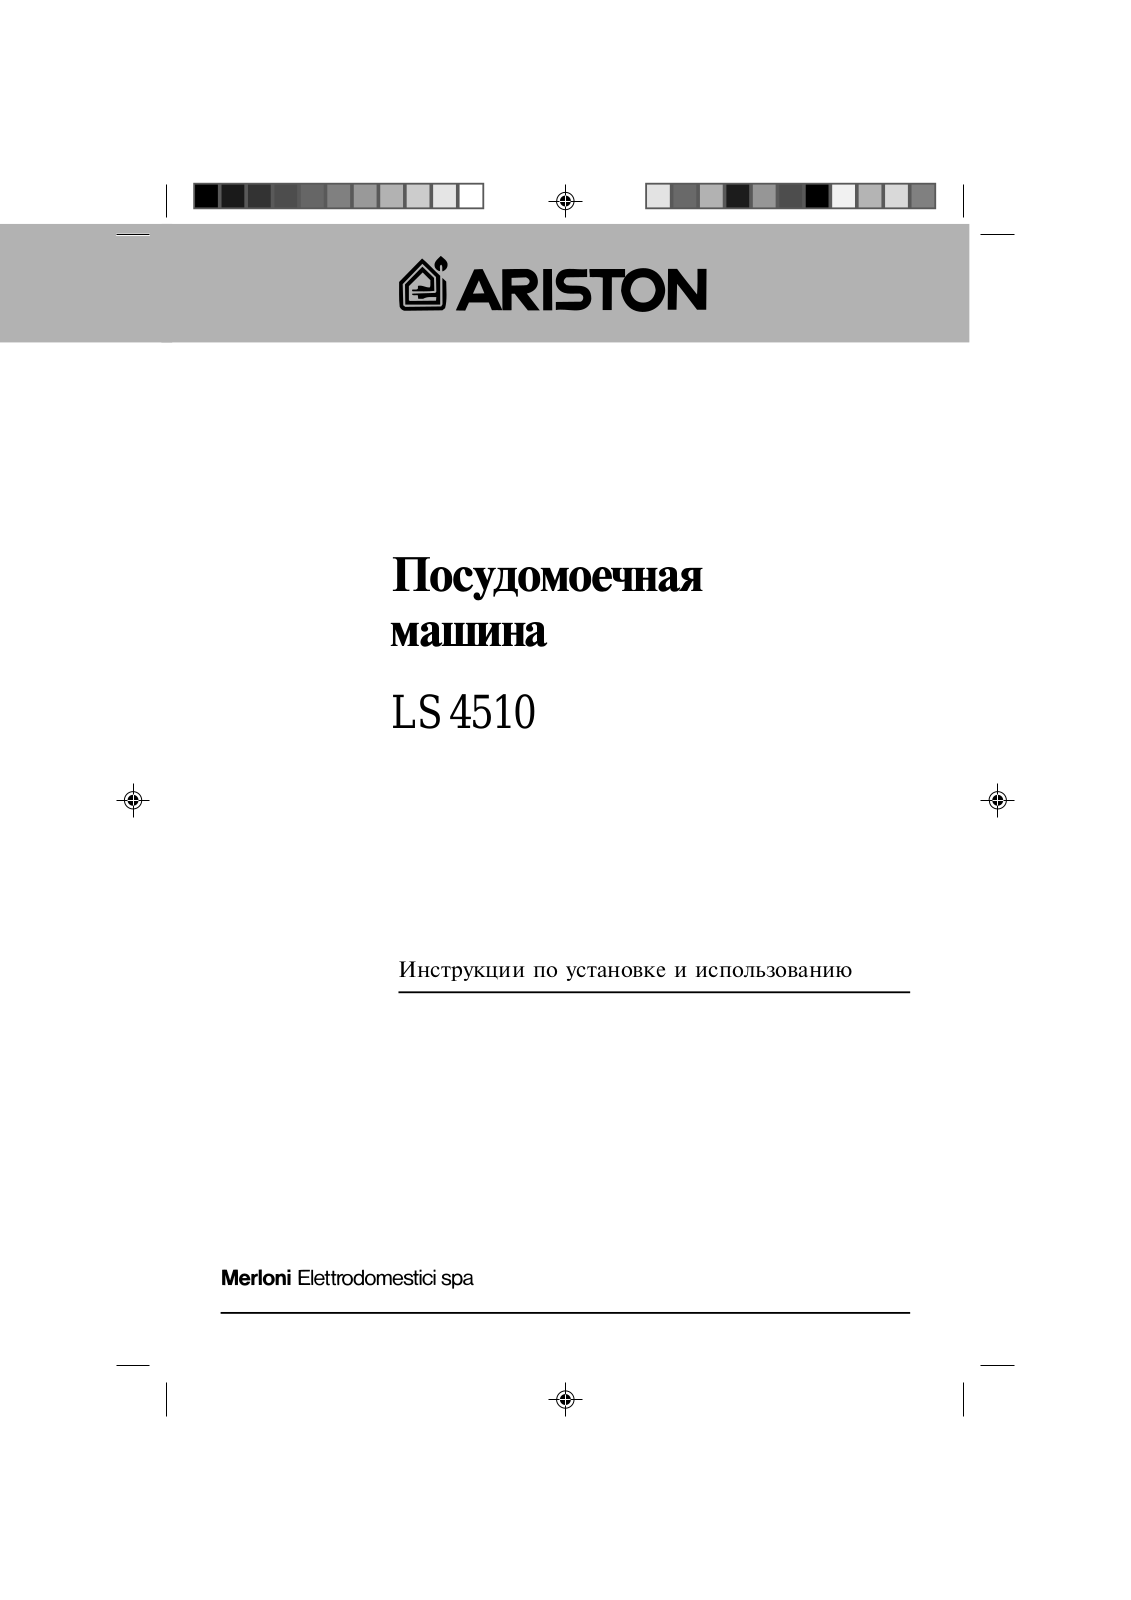 Hotpoint-ariston LS 4510 User Manual